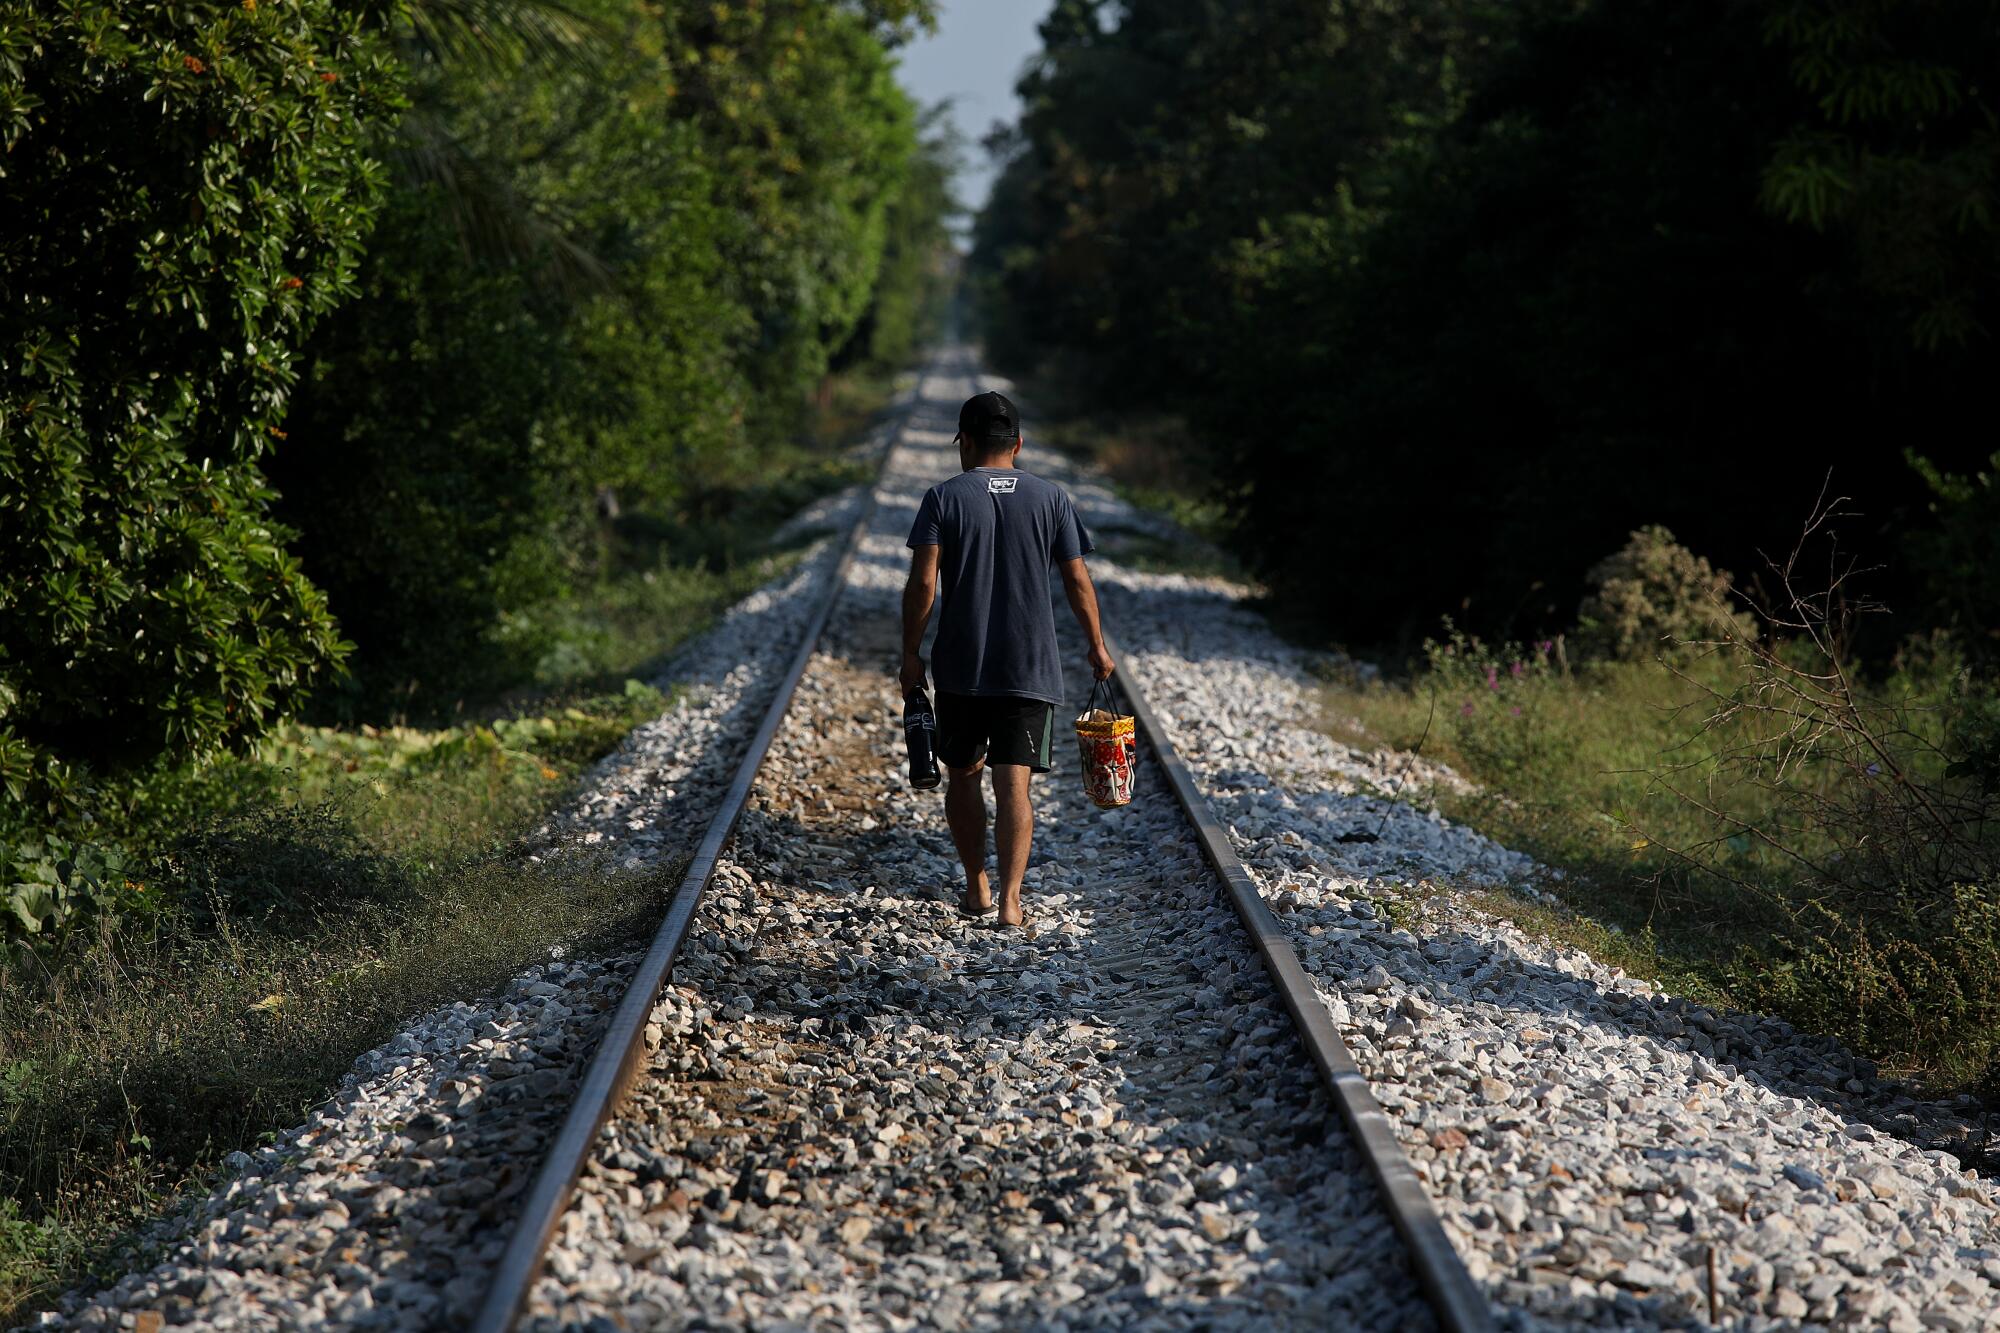 A man walks along the train tracks.